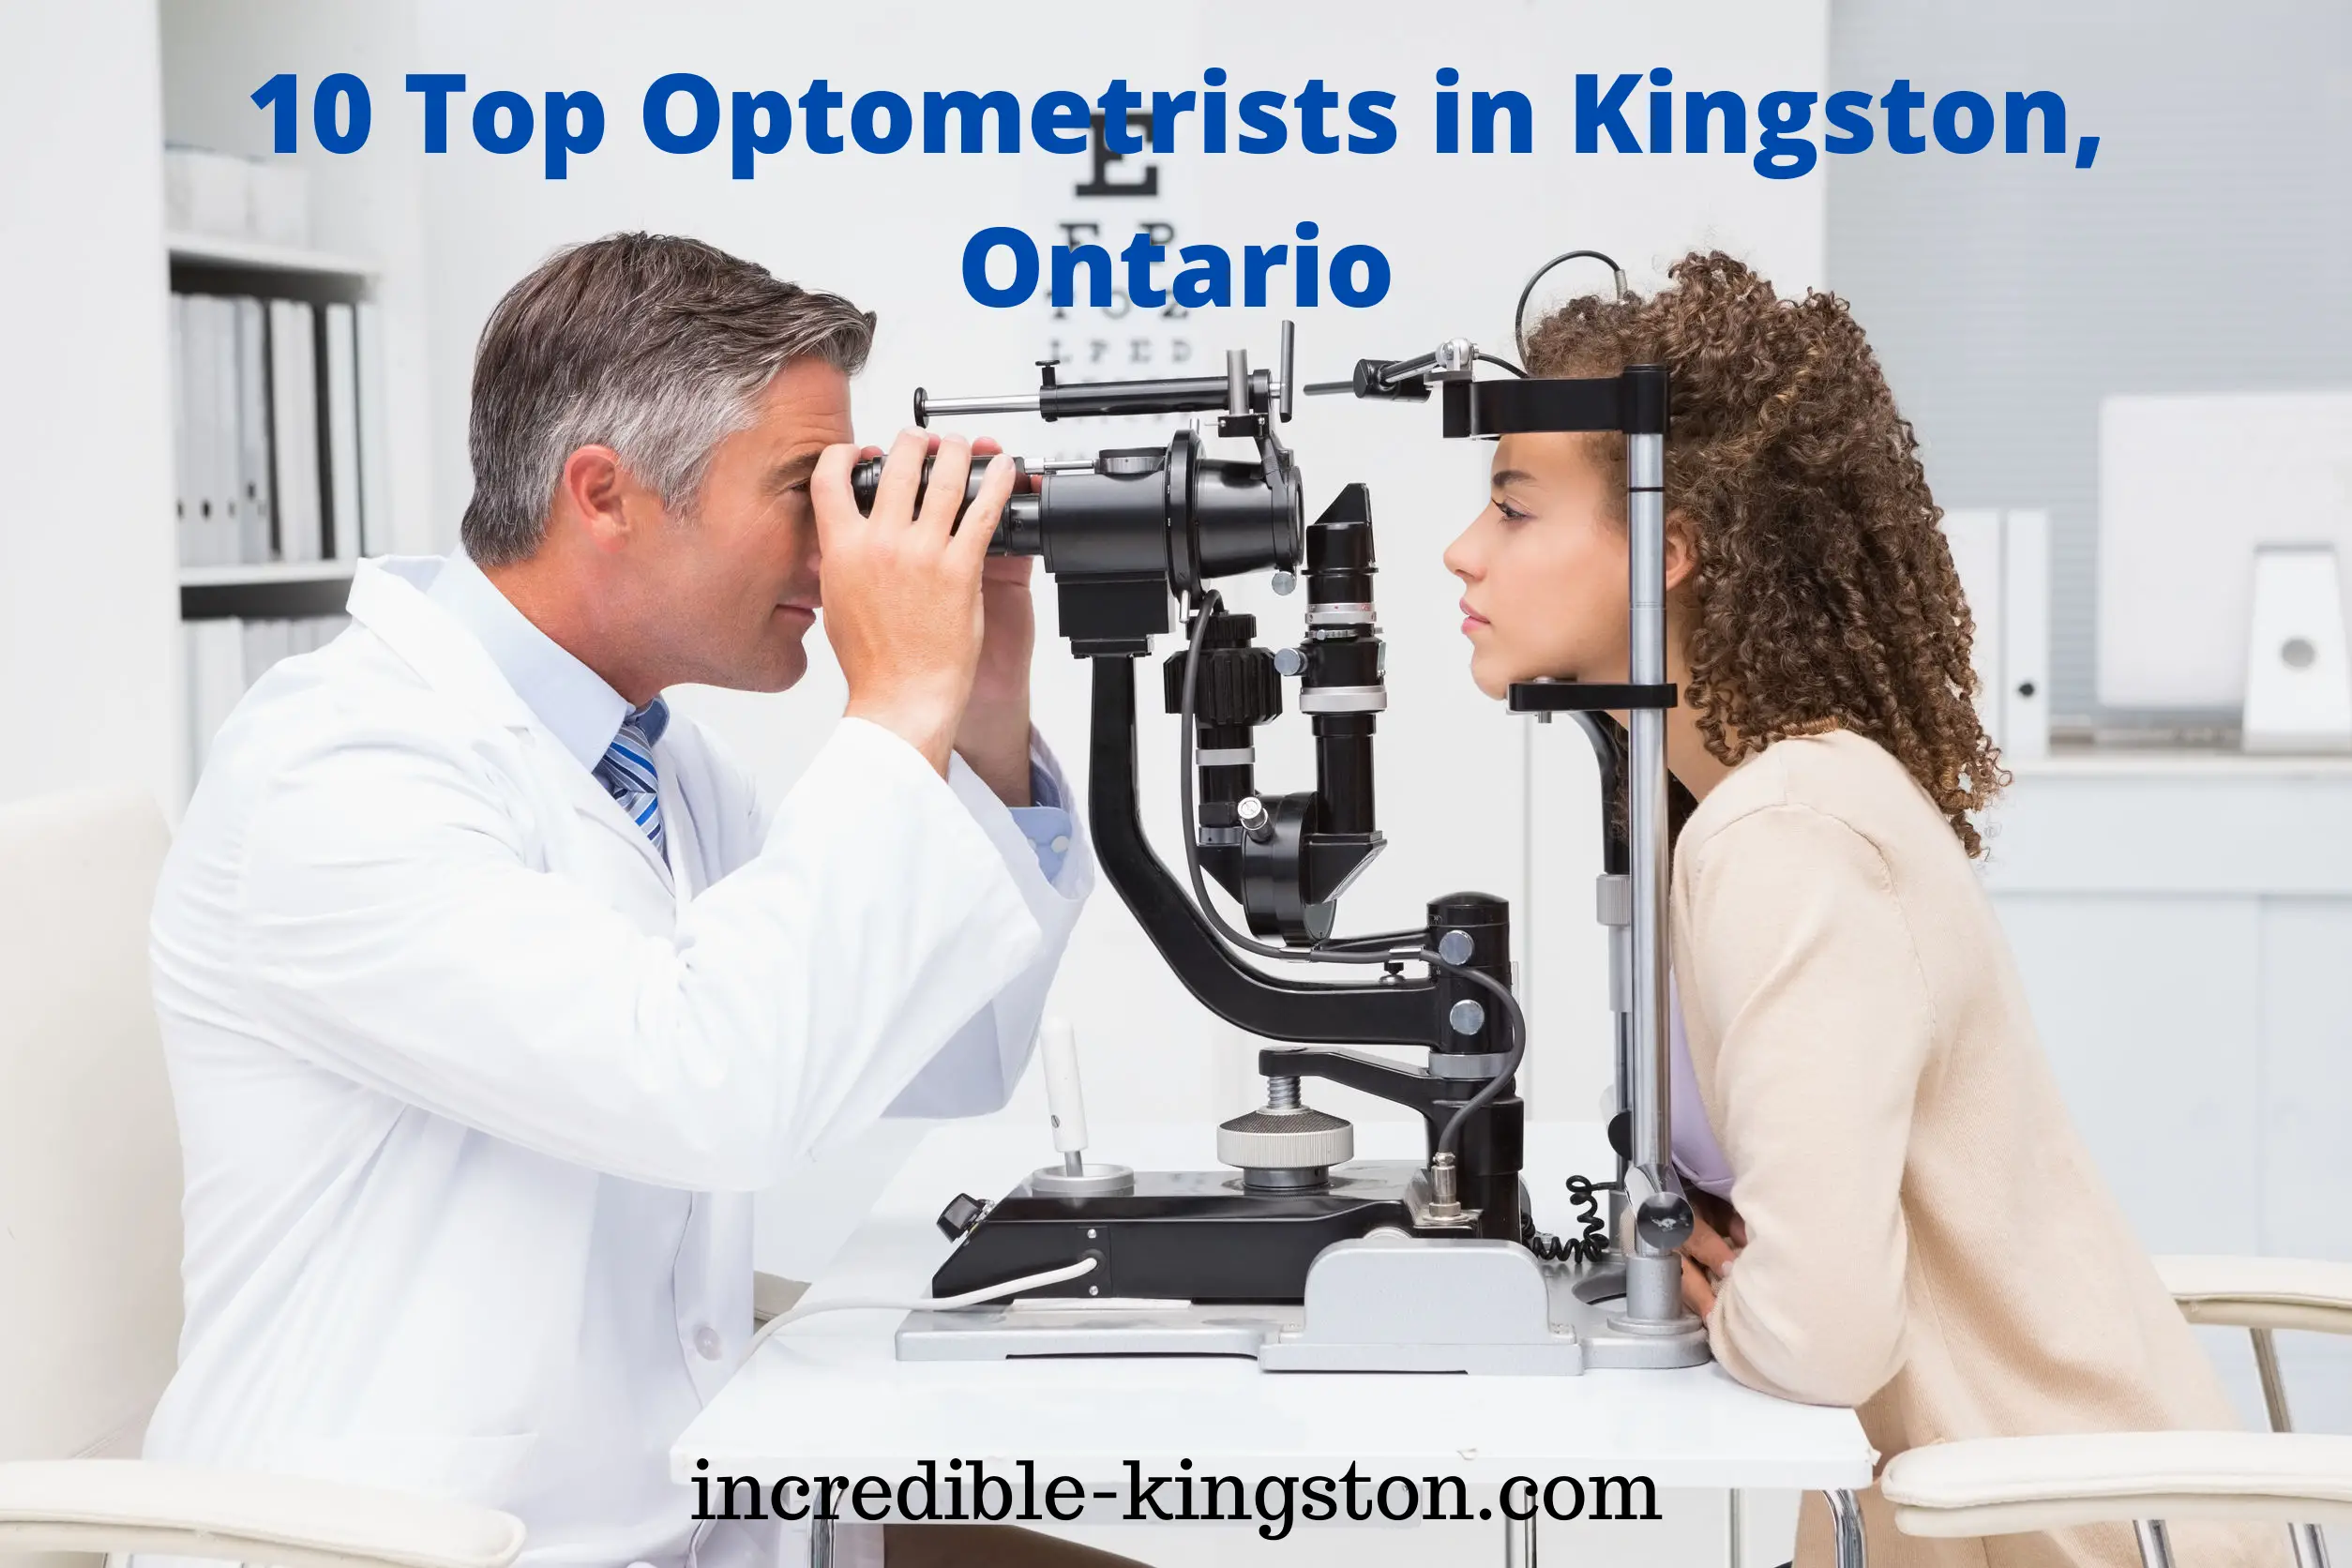 Optometrists in Kingston, Ontario